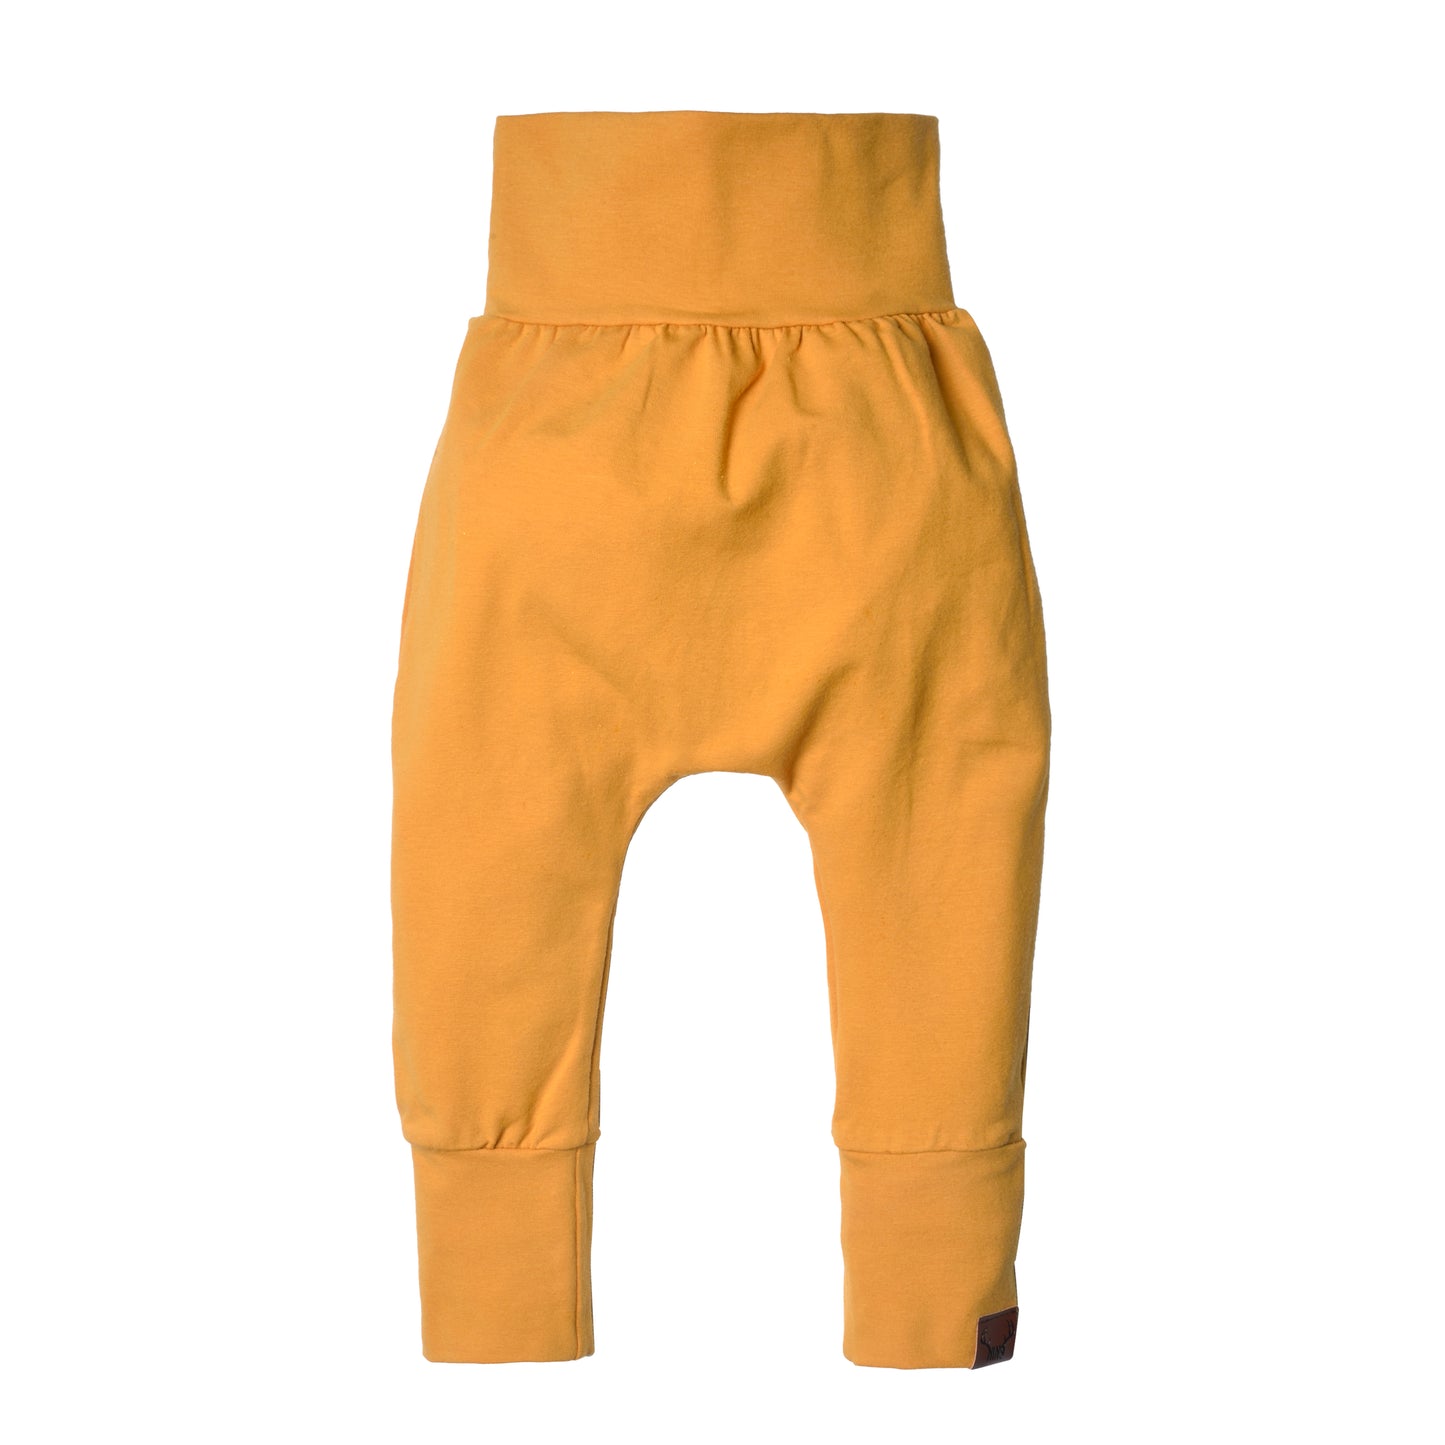 Plain mustard yellow pants - Nine Clothing